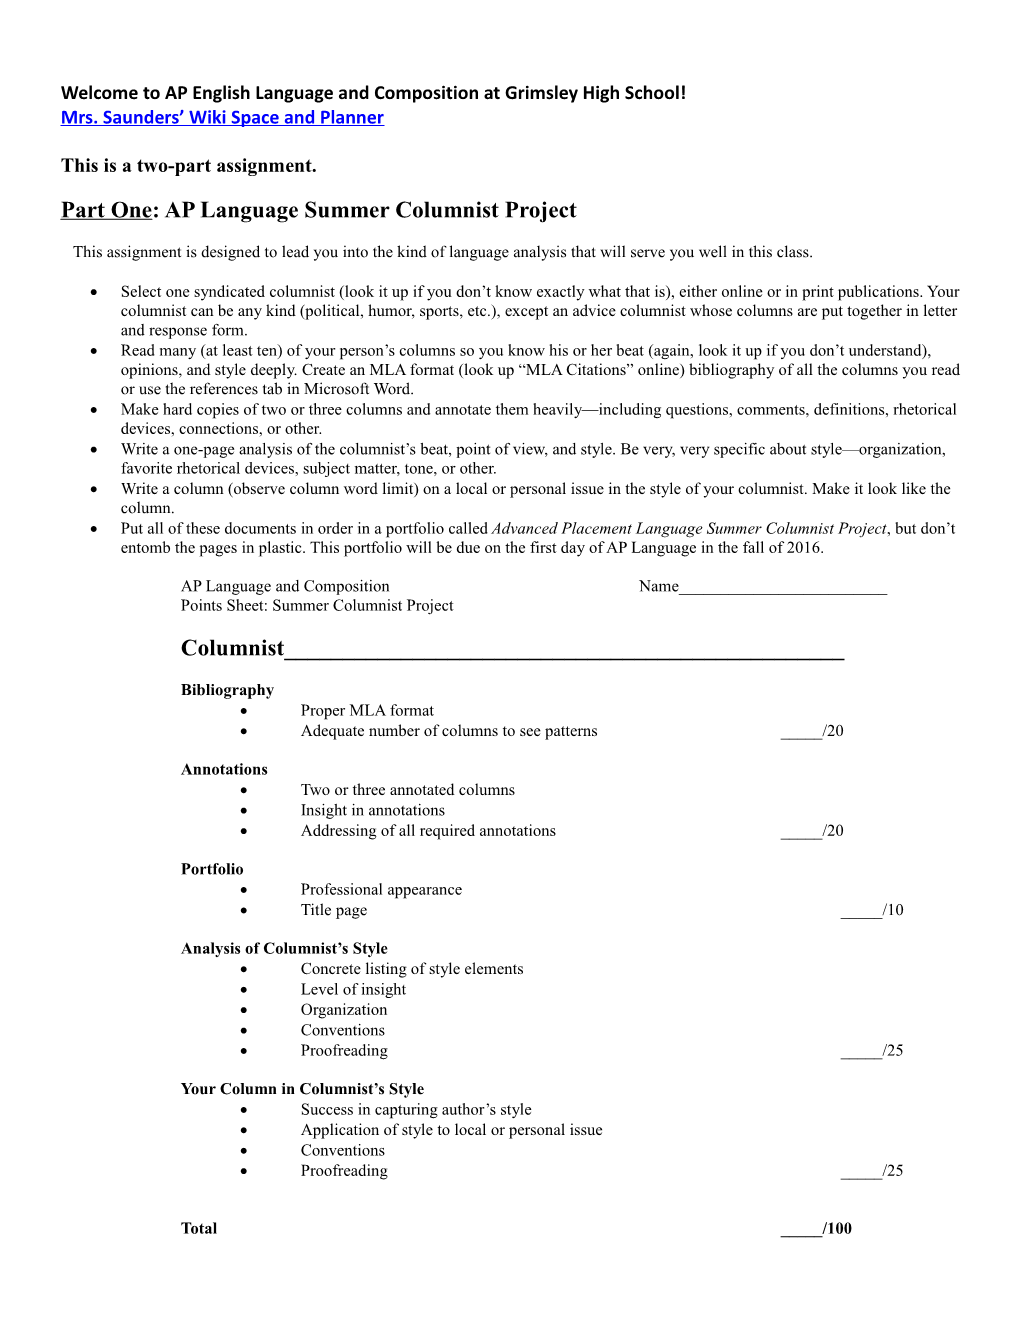 AP Language and Composition s5